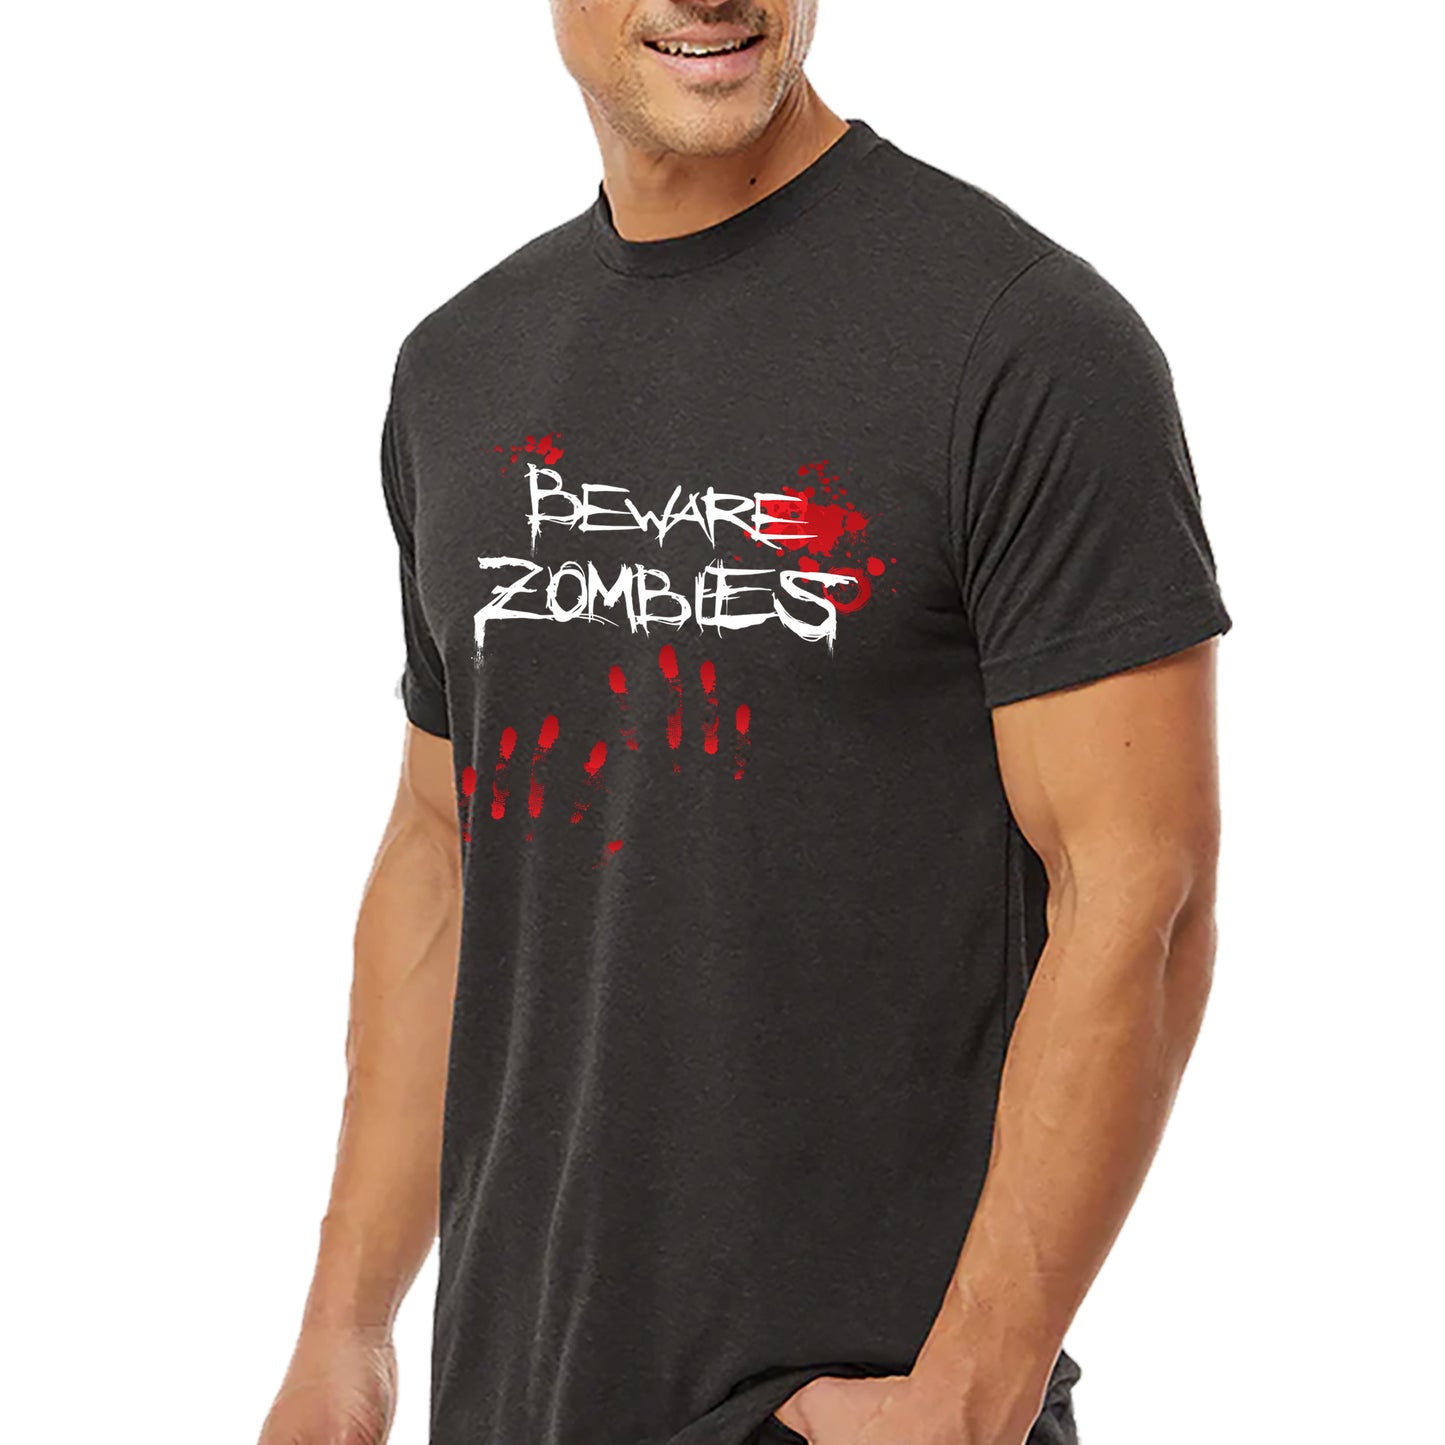 Bevare Zombies T-shirt